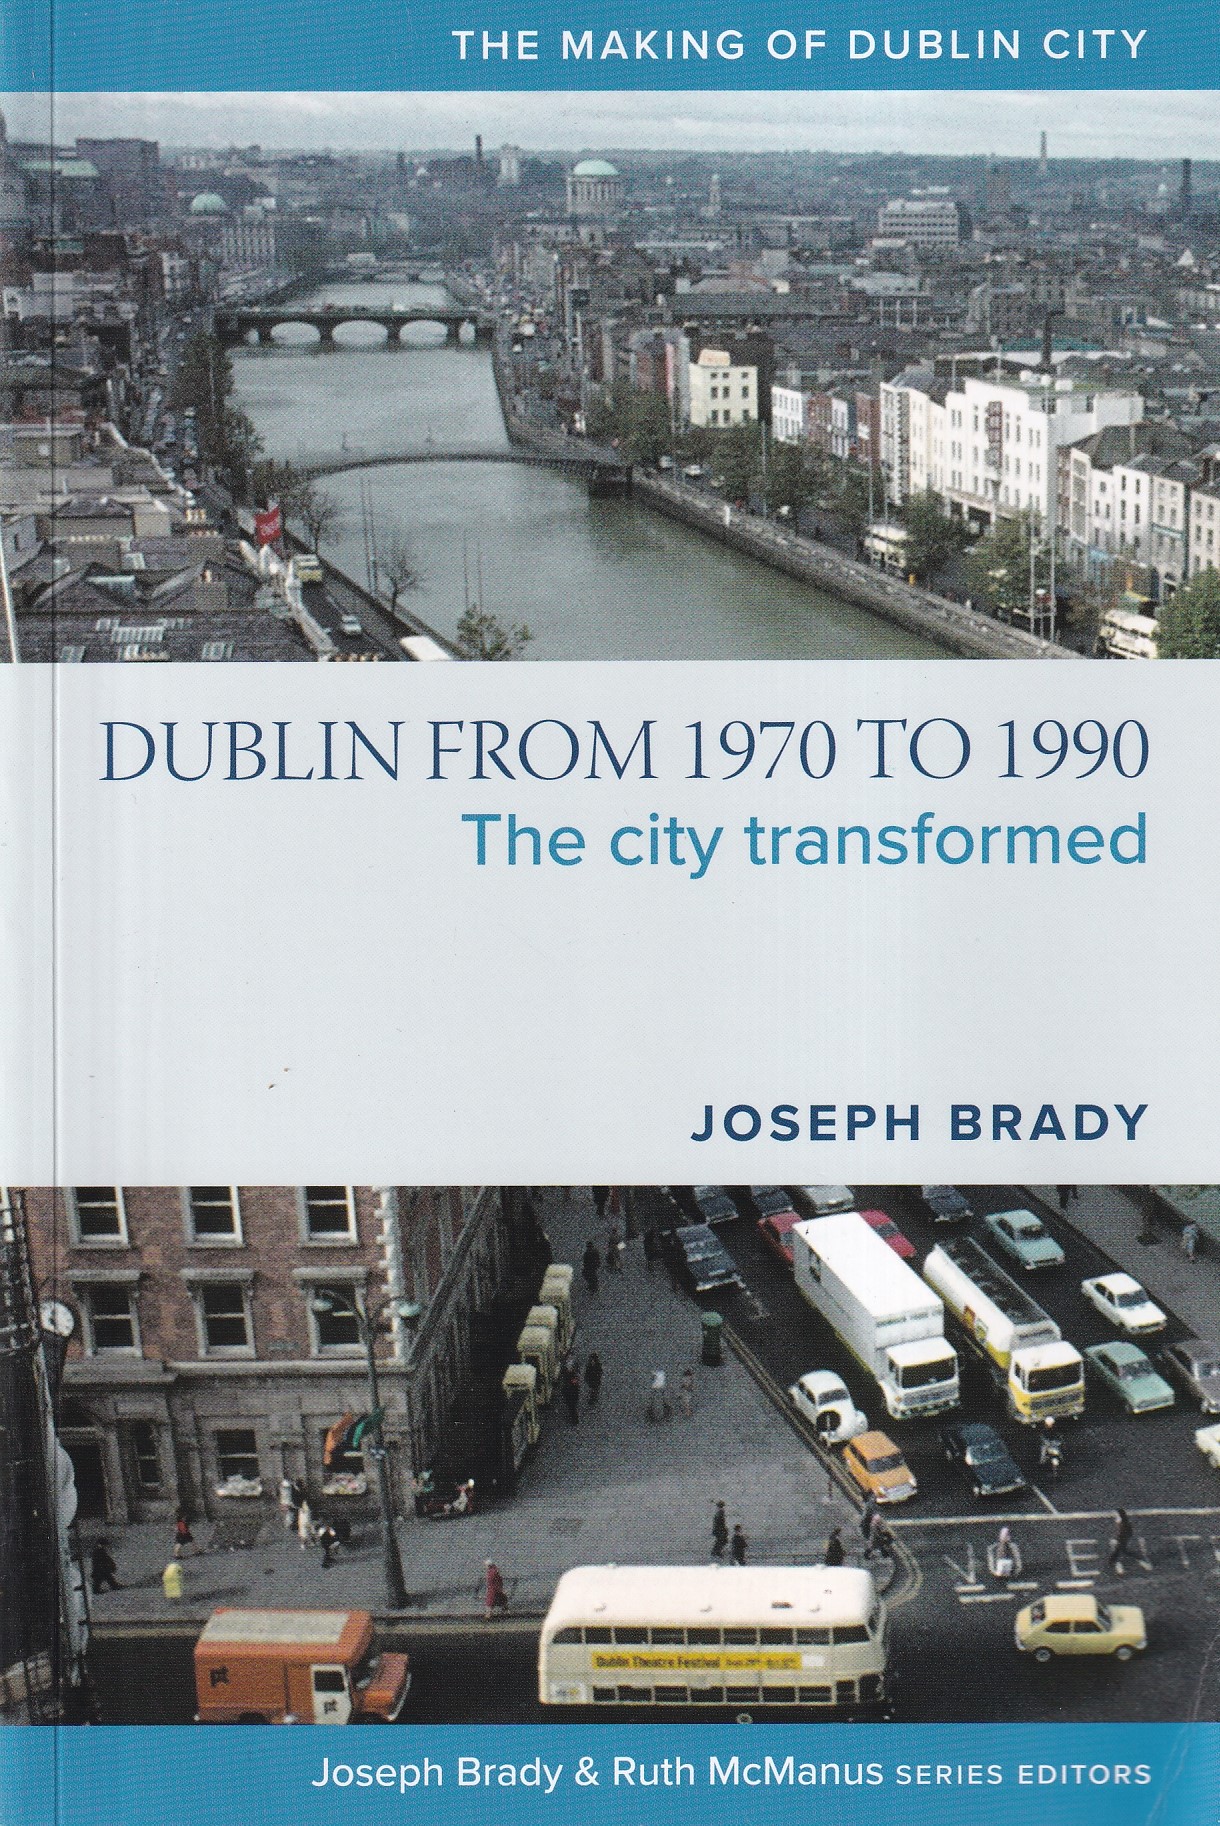 Dublin from 1970 to 1990: The City Transformed | Joseph Brady | Charlie Byrne's